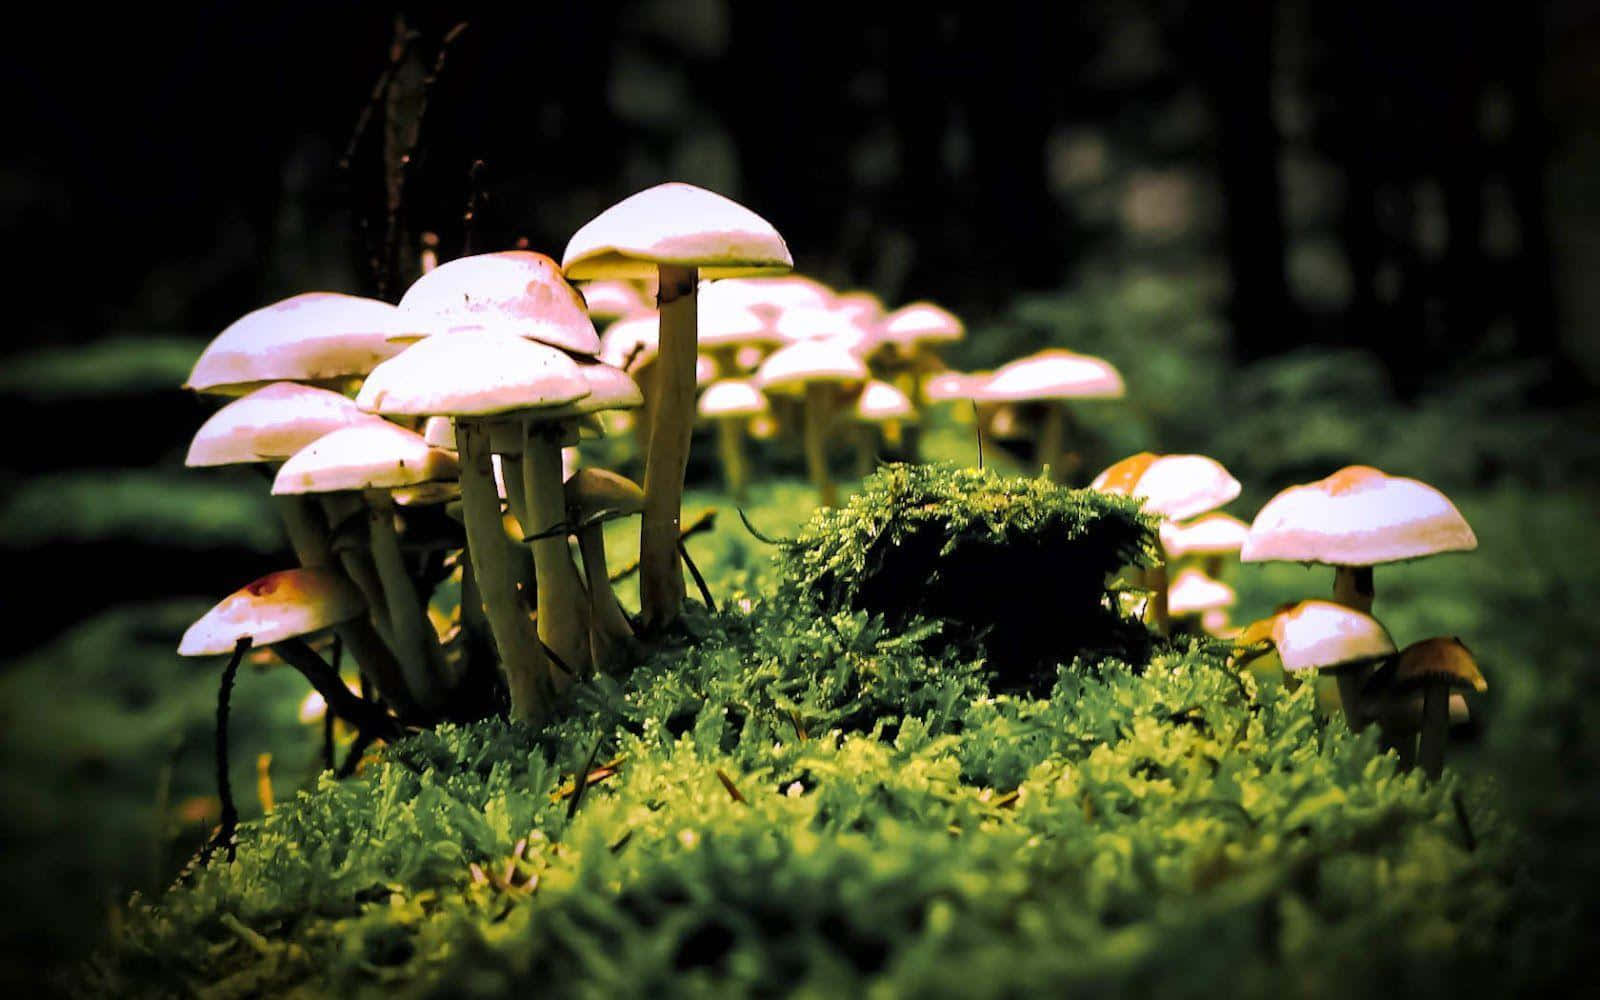 The beauty of a Magic Mushroom